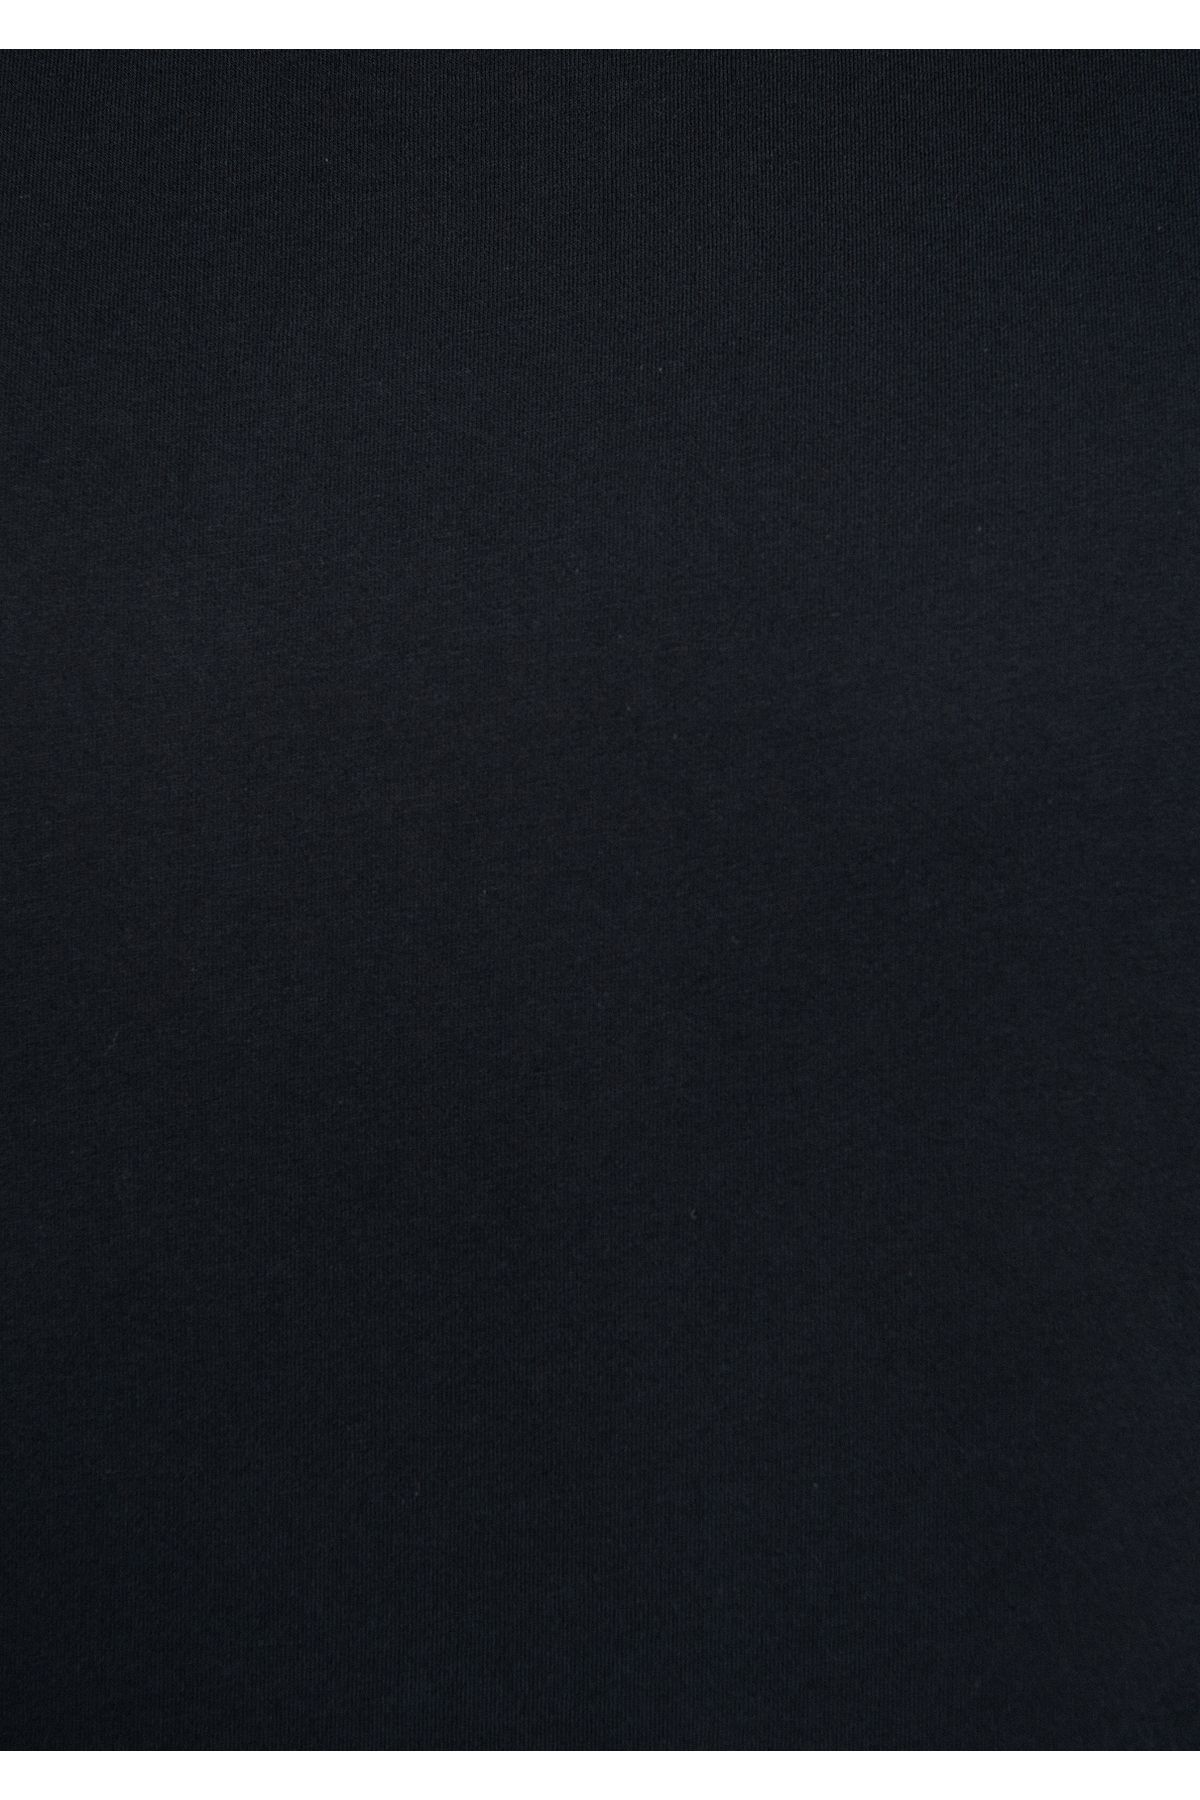 Mavi تی شرت اصلی سیاه و سفید مناسب / کلاس عادی 0610251-900